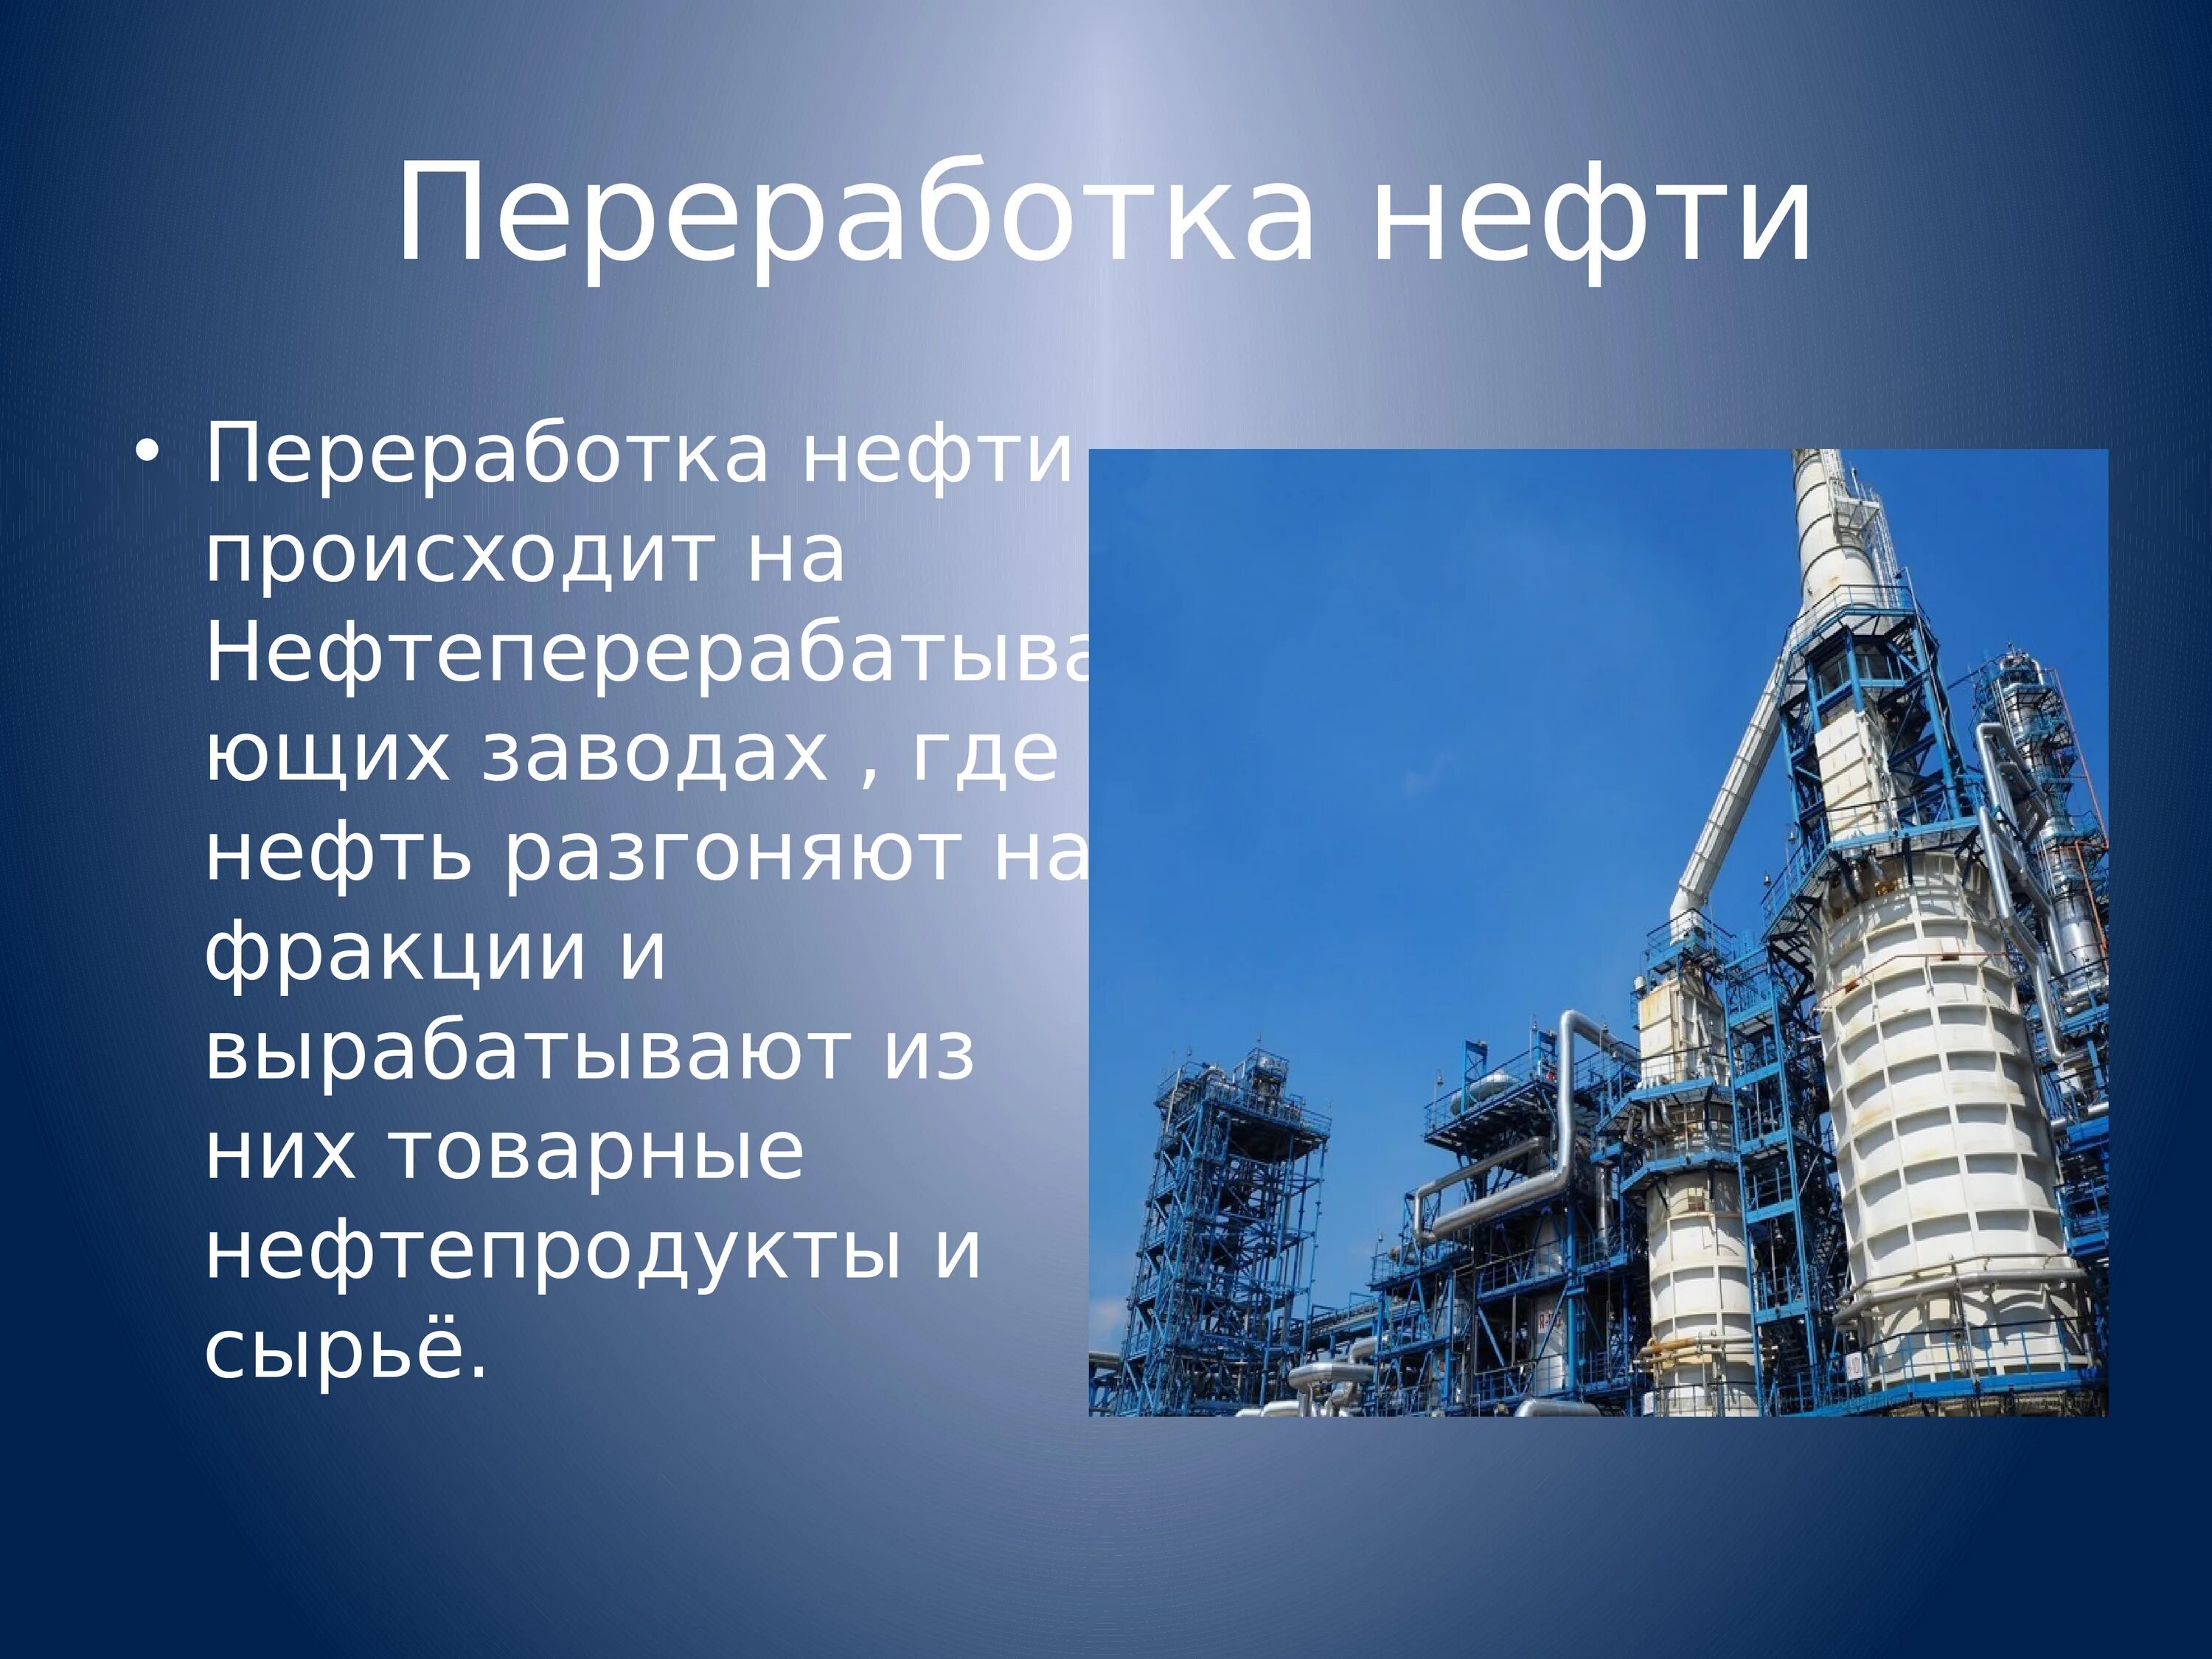 Переработка нефти. Отрасль нефтепереработки. Нефть промышленность. Проект промышленность в России.